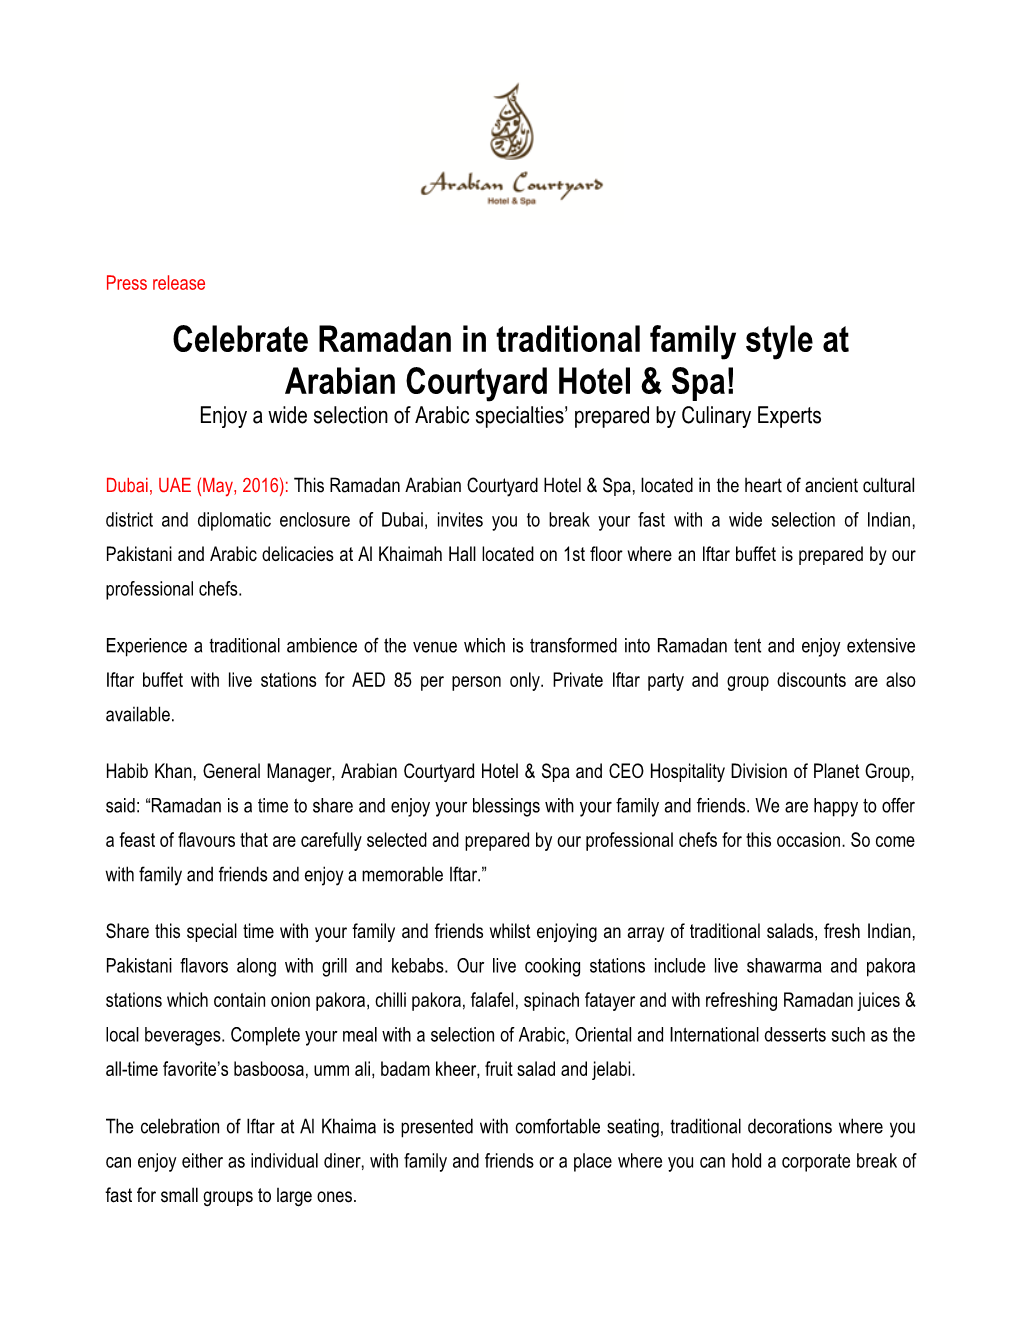 Celebrate Ramadan in Traditional Family Style at Arabian Courtyard Hotel & Spa!